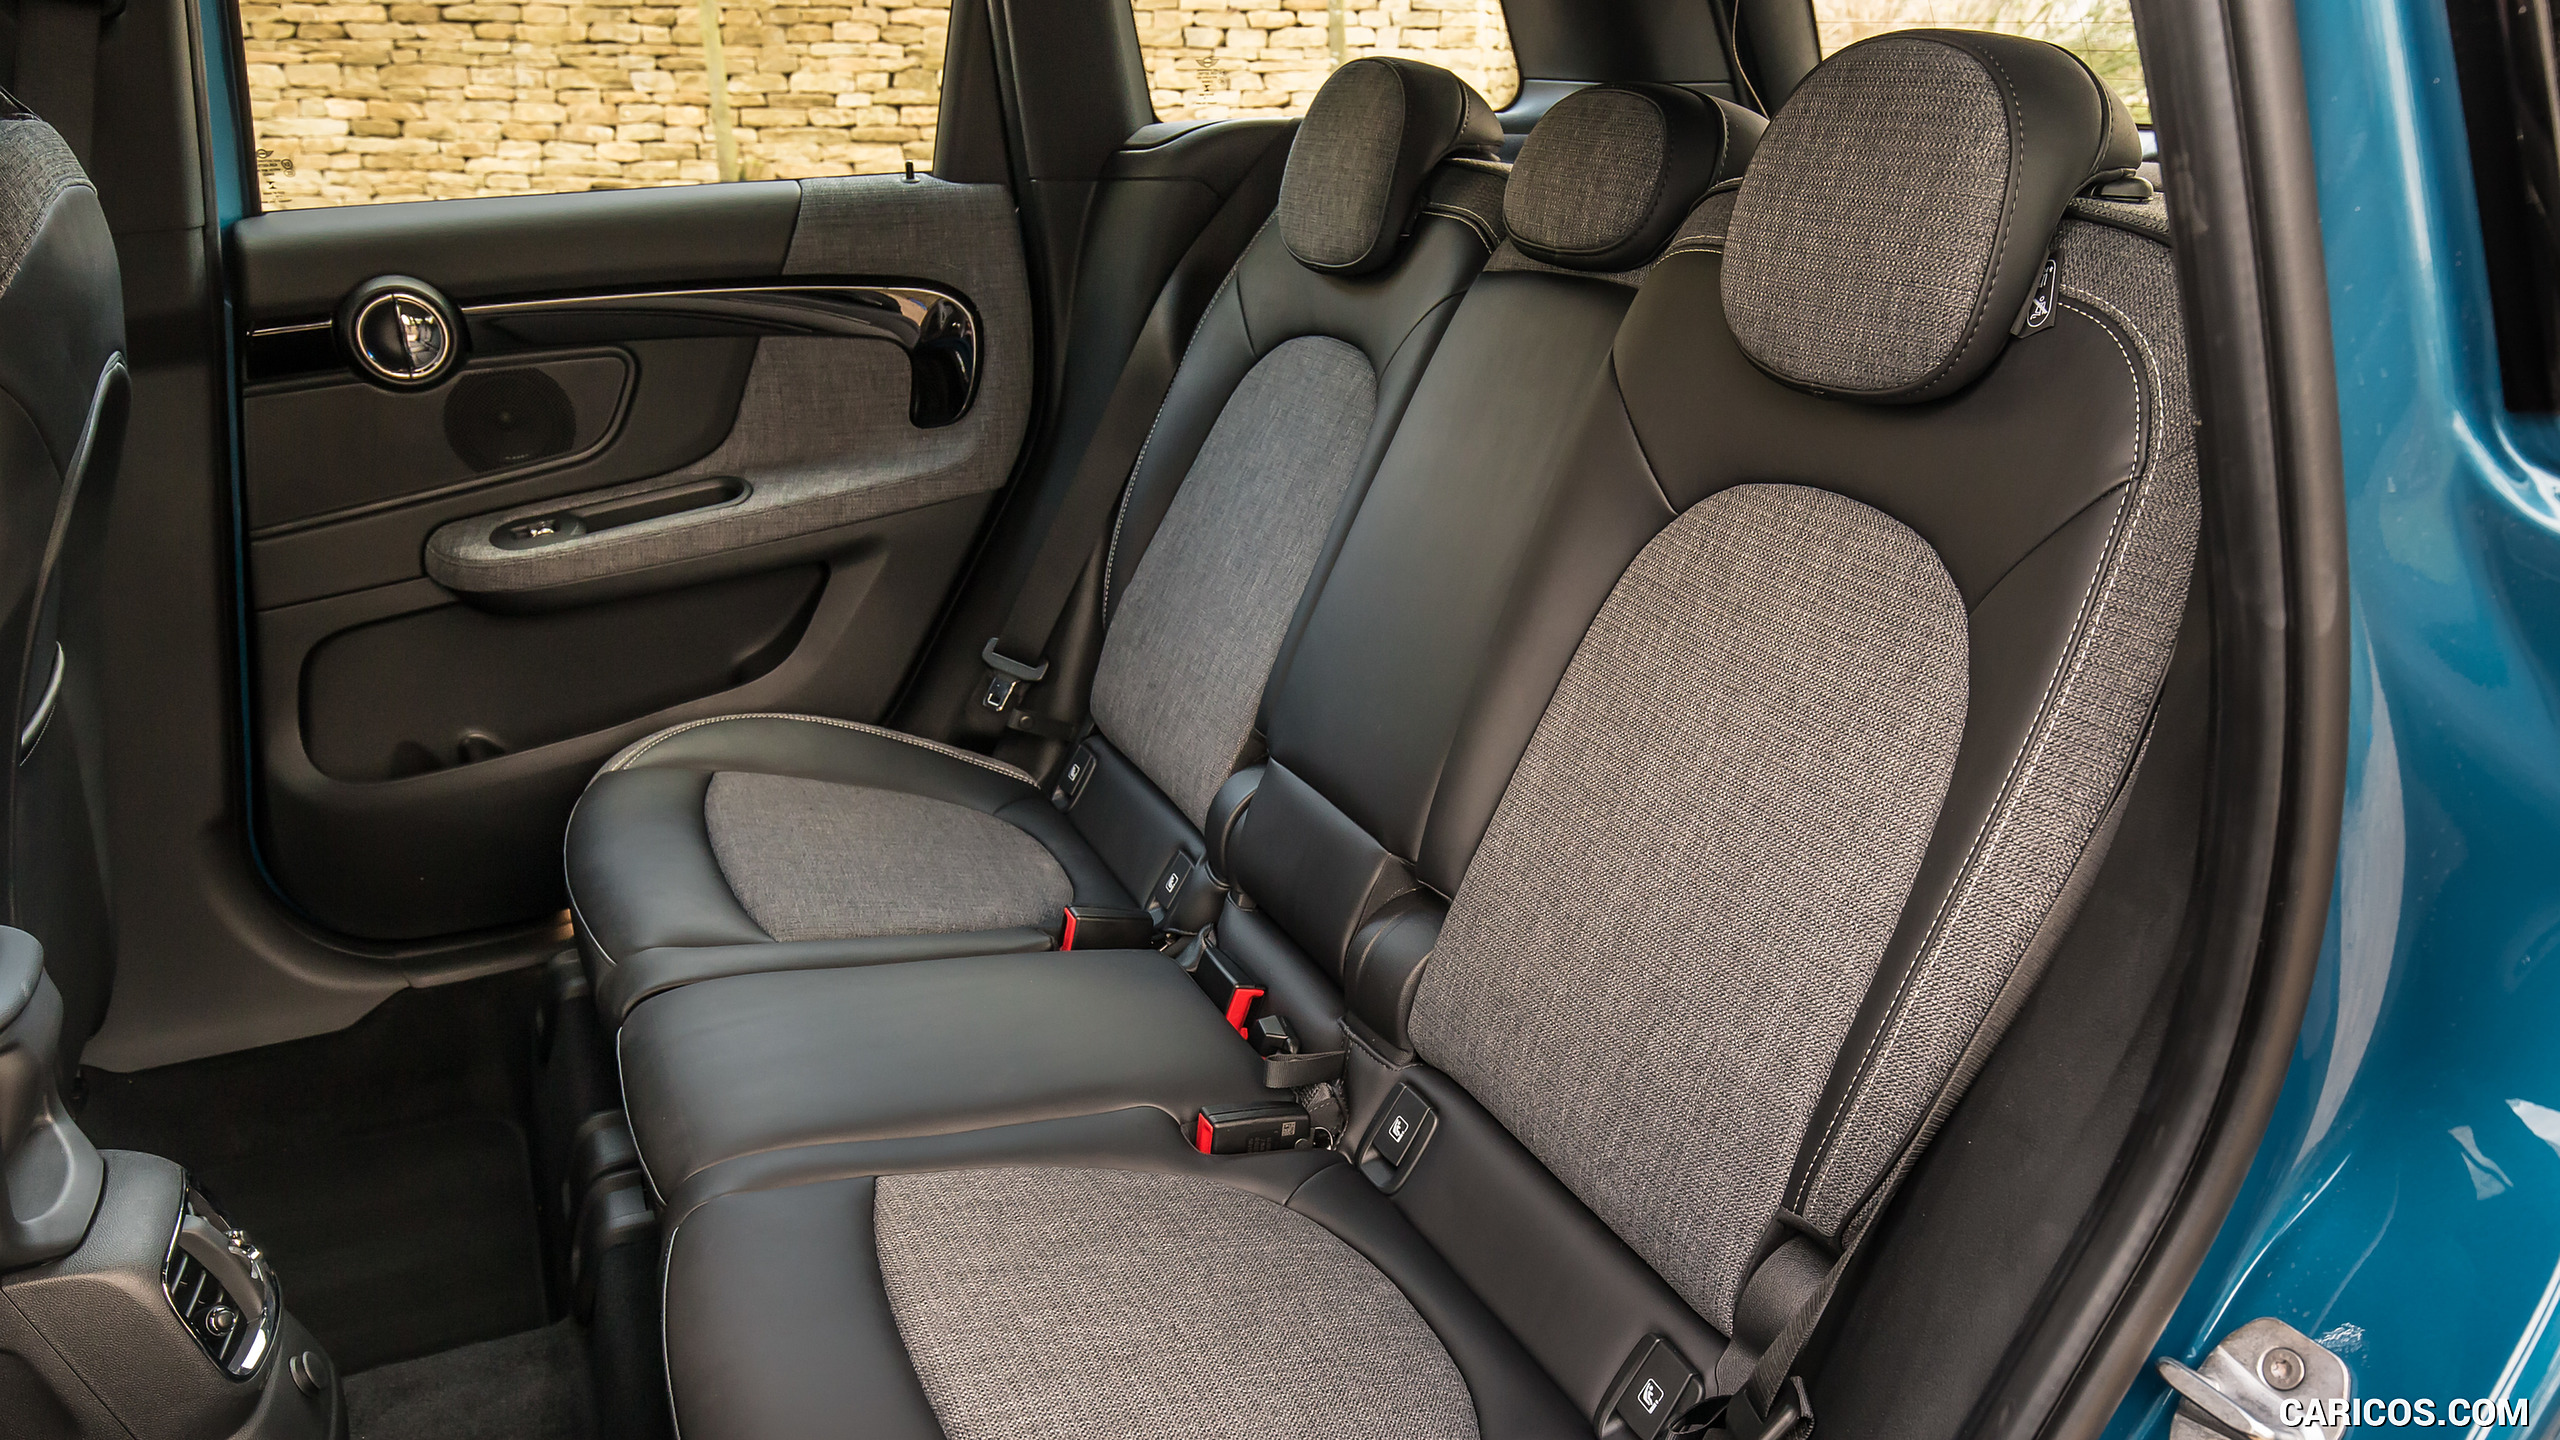 2017 MINI Cooper D Countryman (UK-Spec) - Interior, Rear Seats, #337 of 372